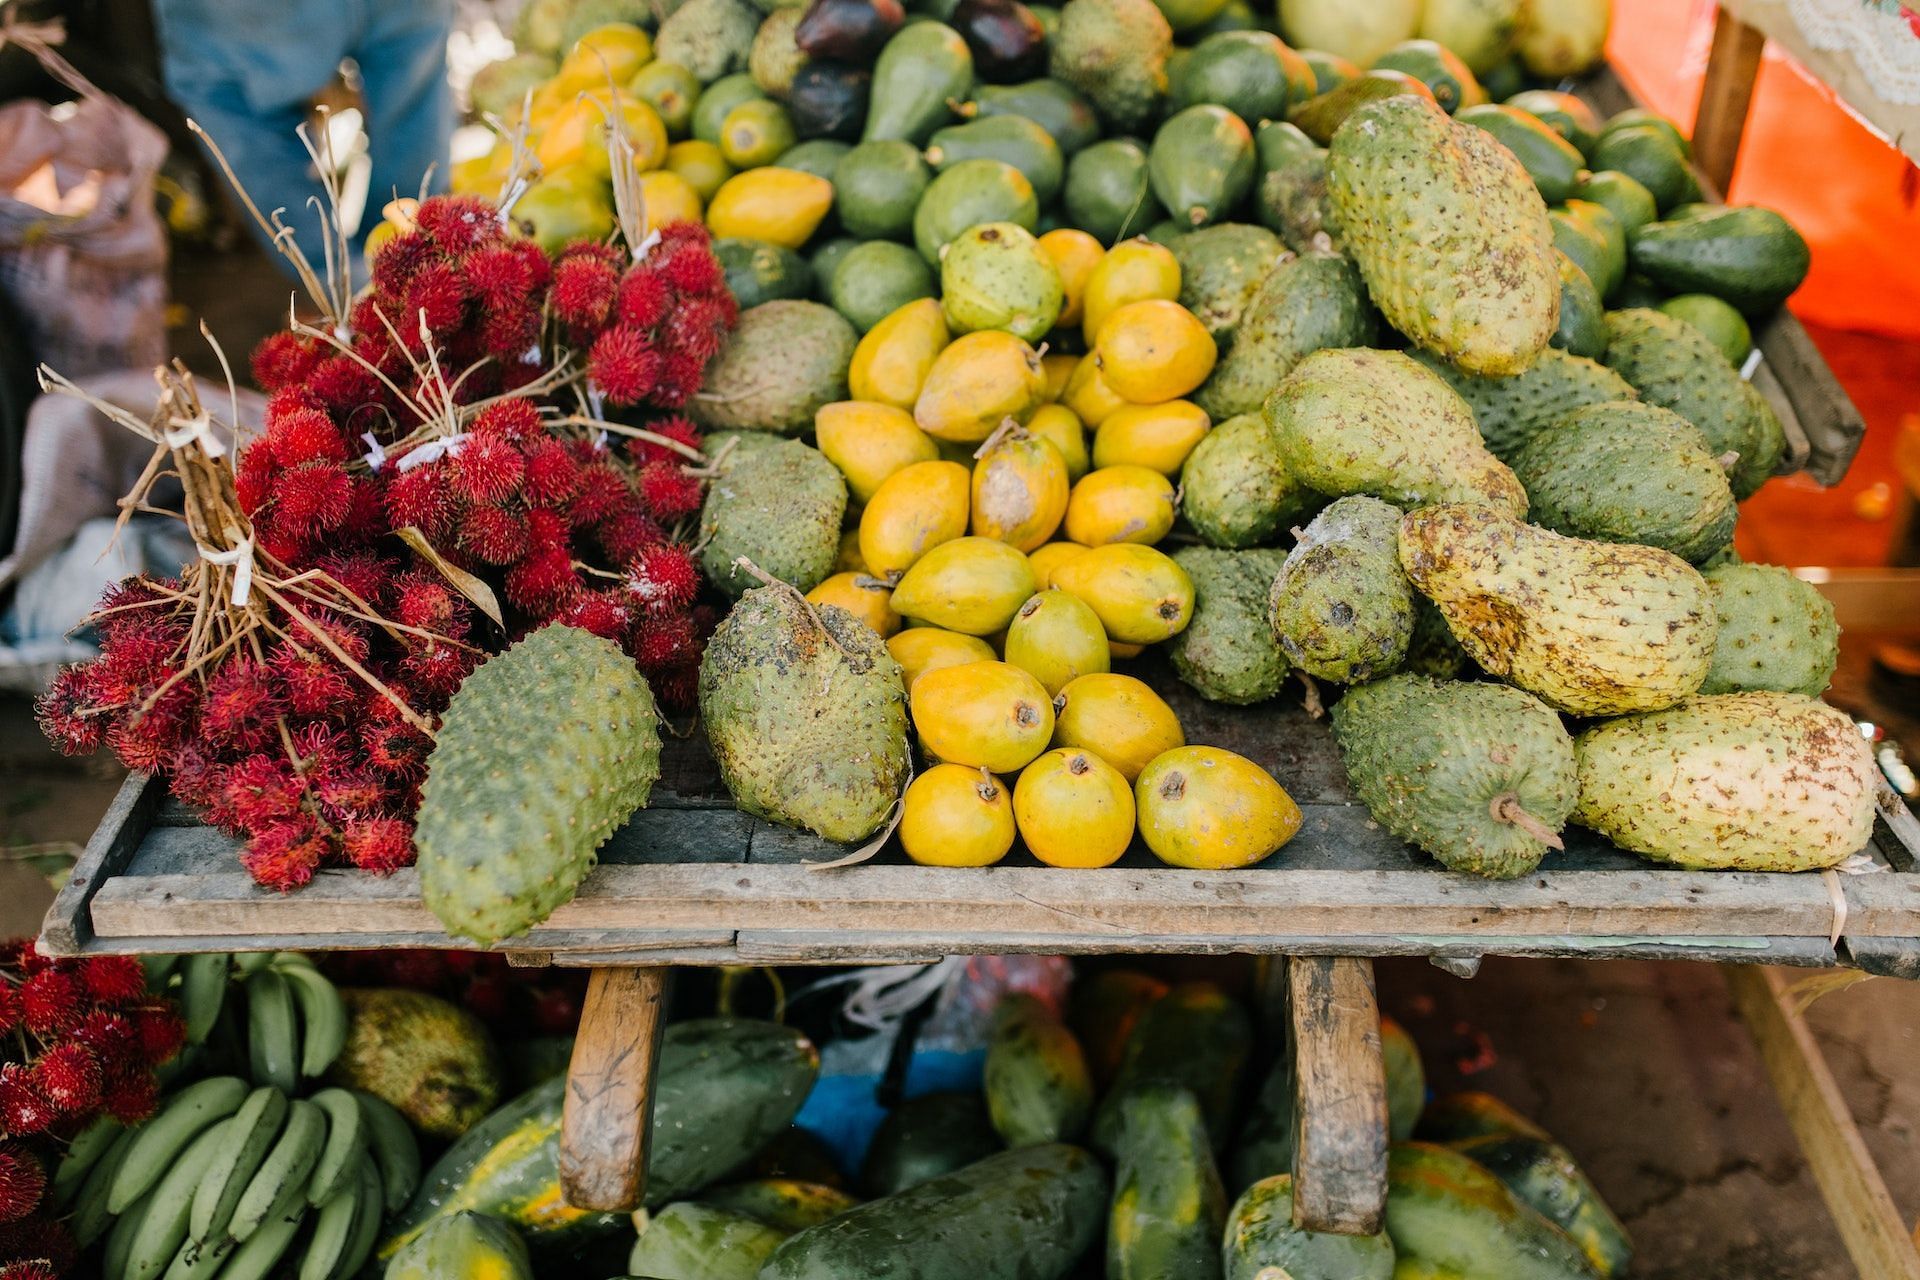 These fruits are rich in dietary fiber (Image via Unsplash/Julia Volk)